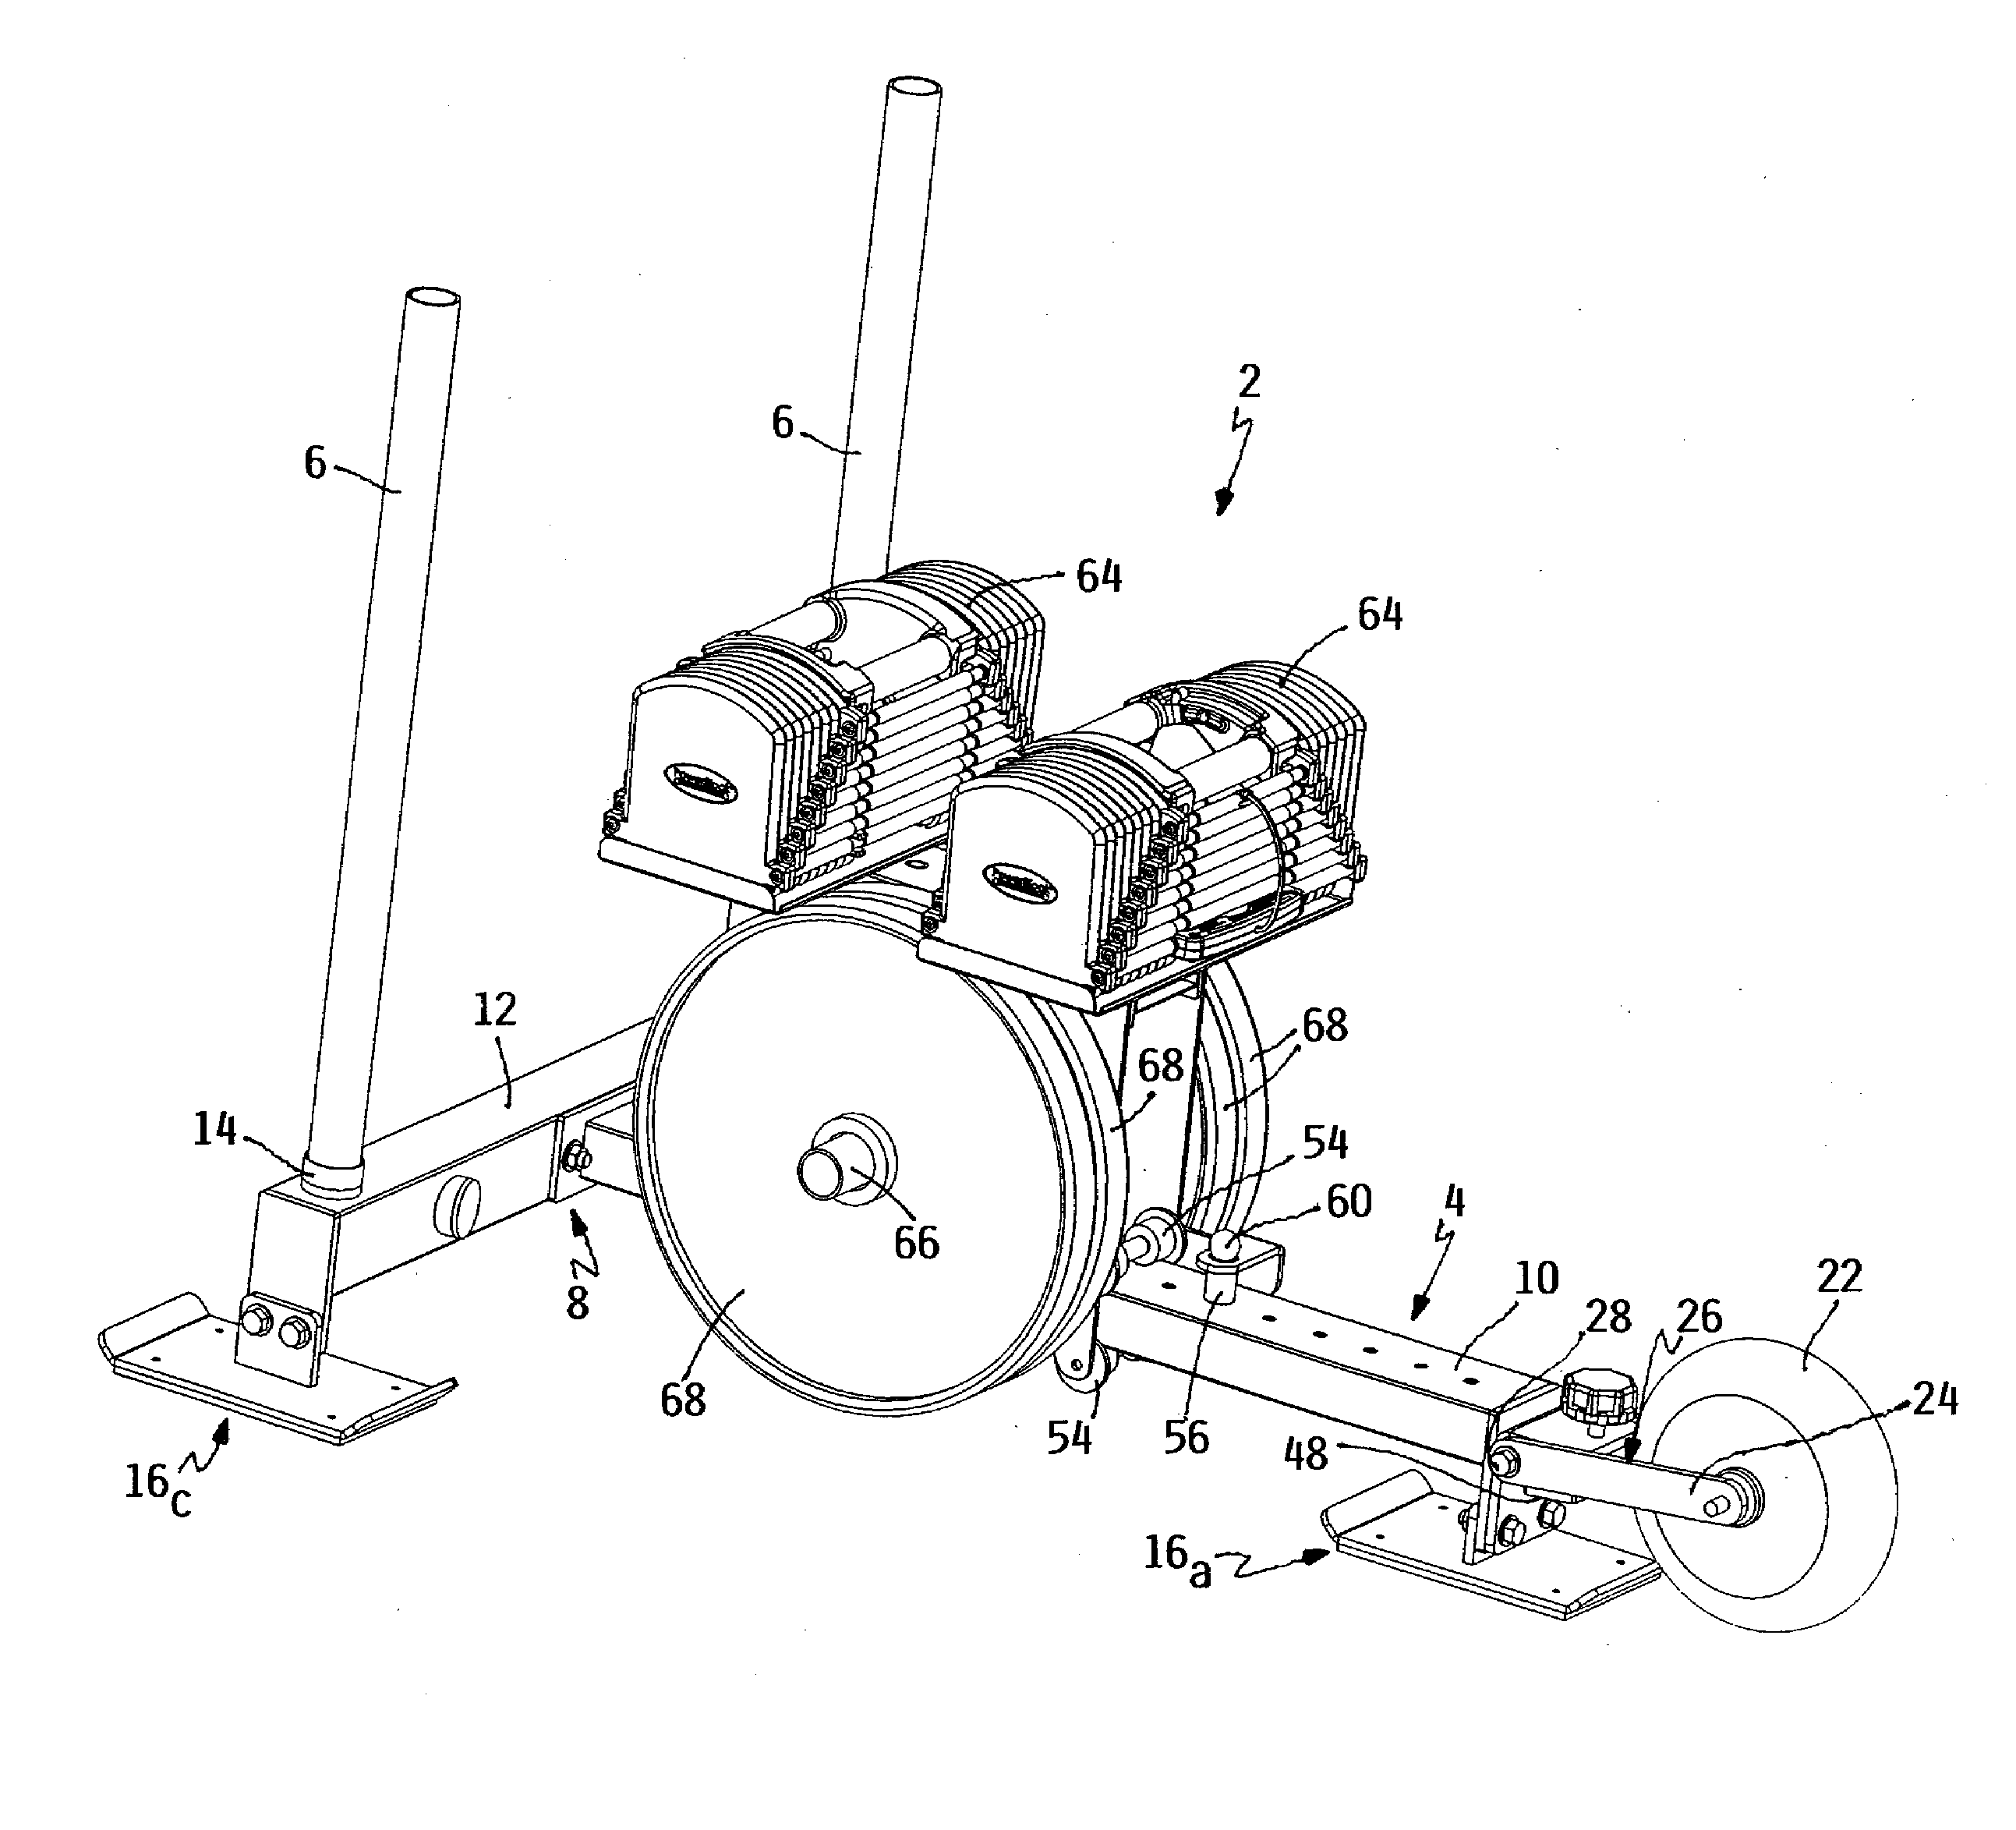 Exercise device having sled or wheelbarrow configuration